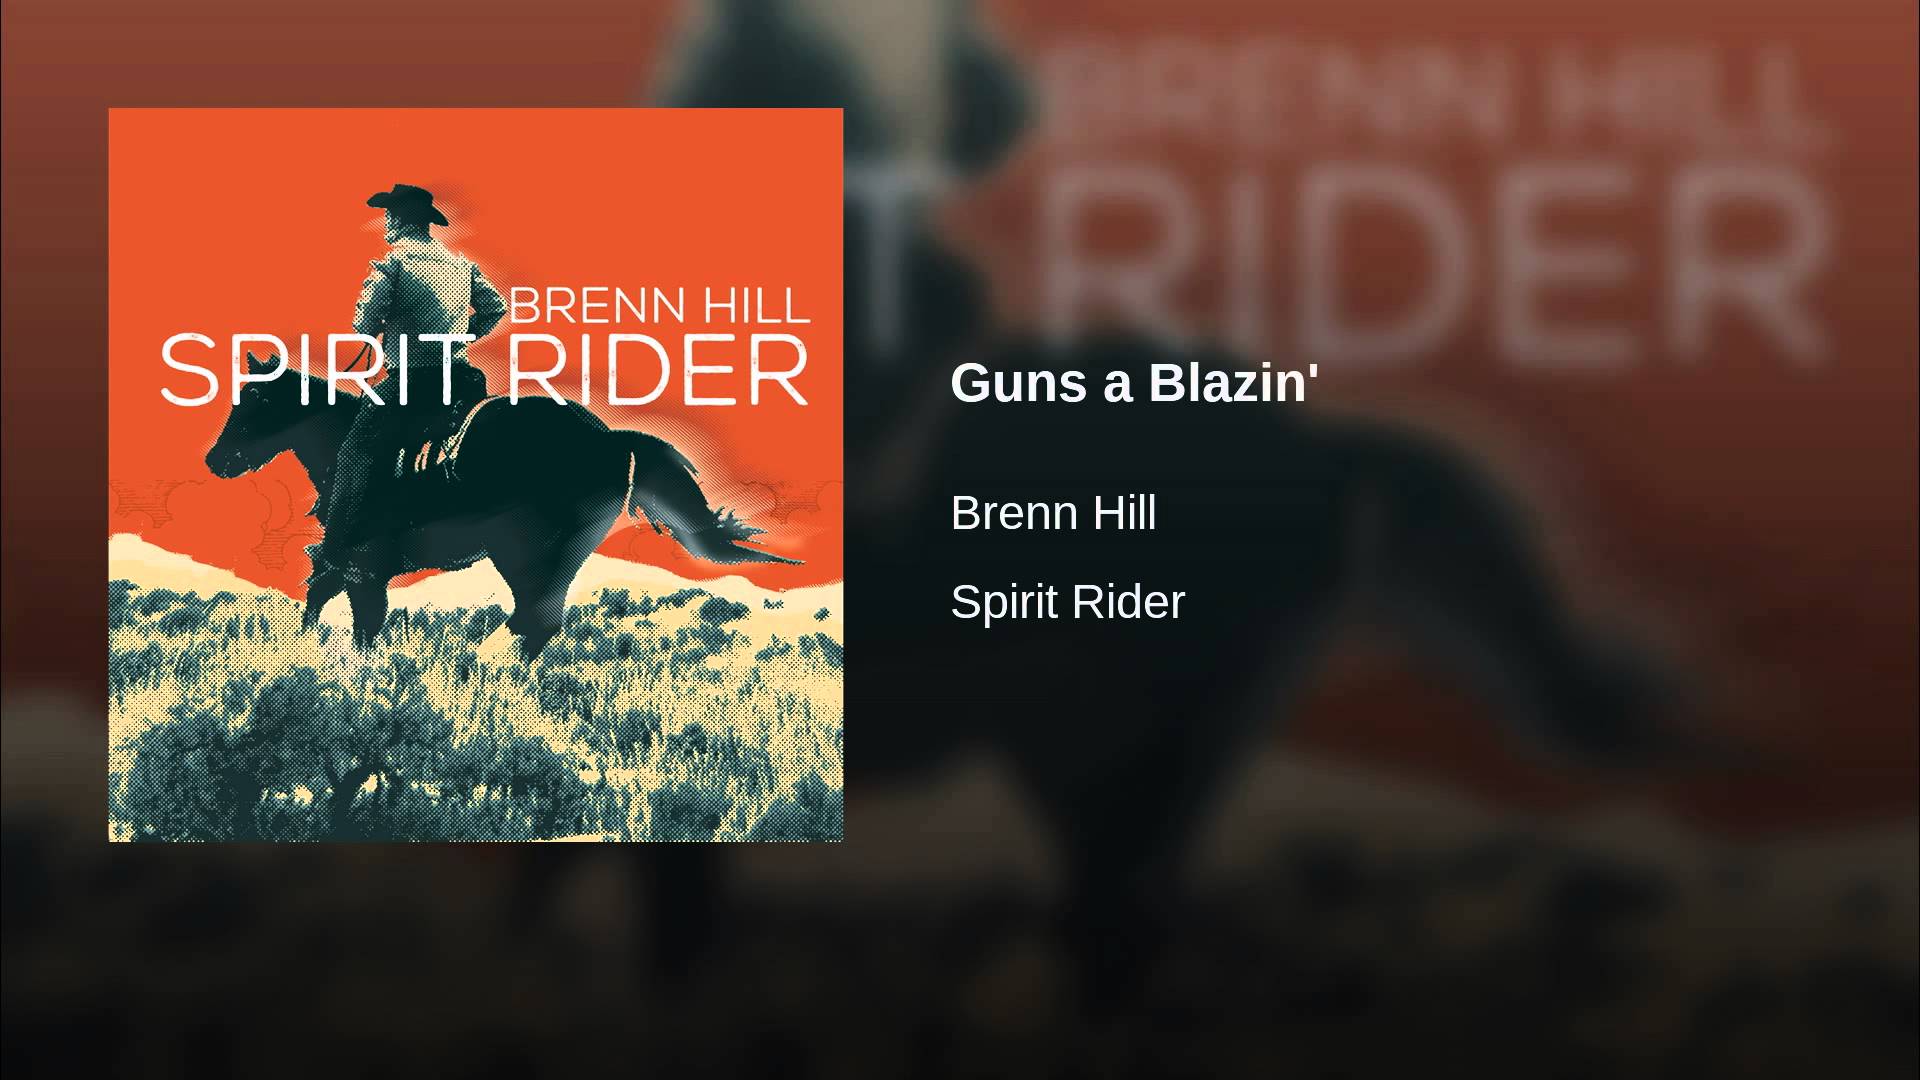 Guns a Blazin' - YouTube